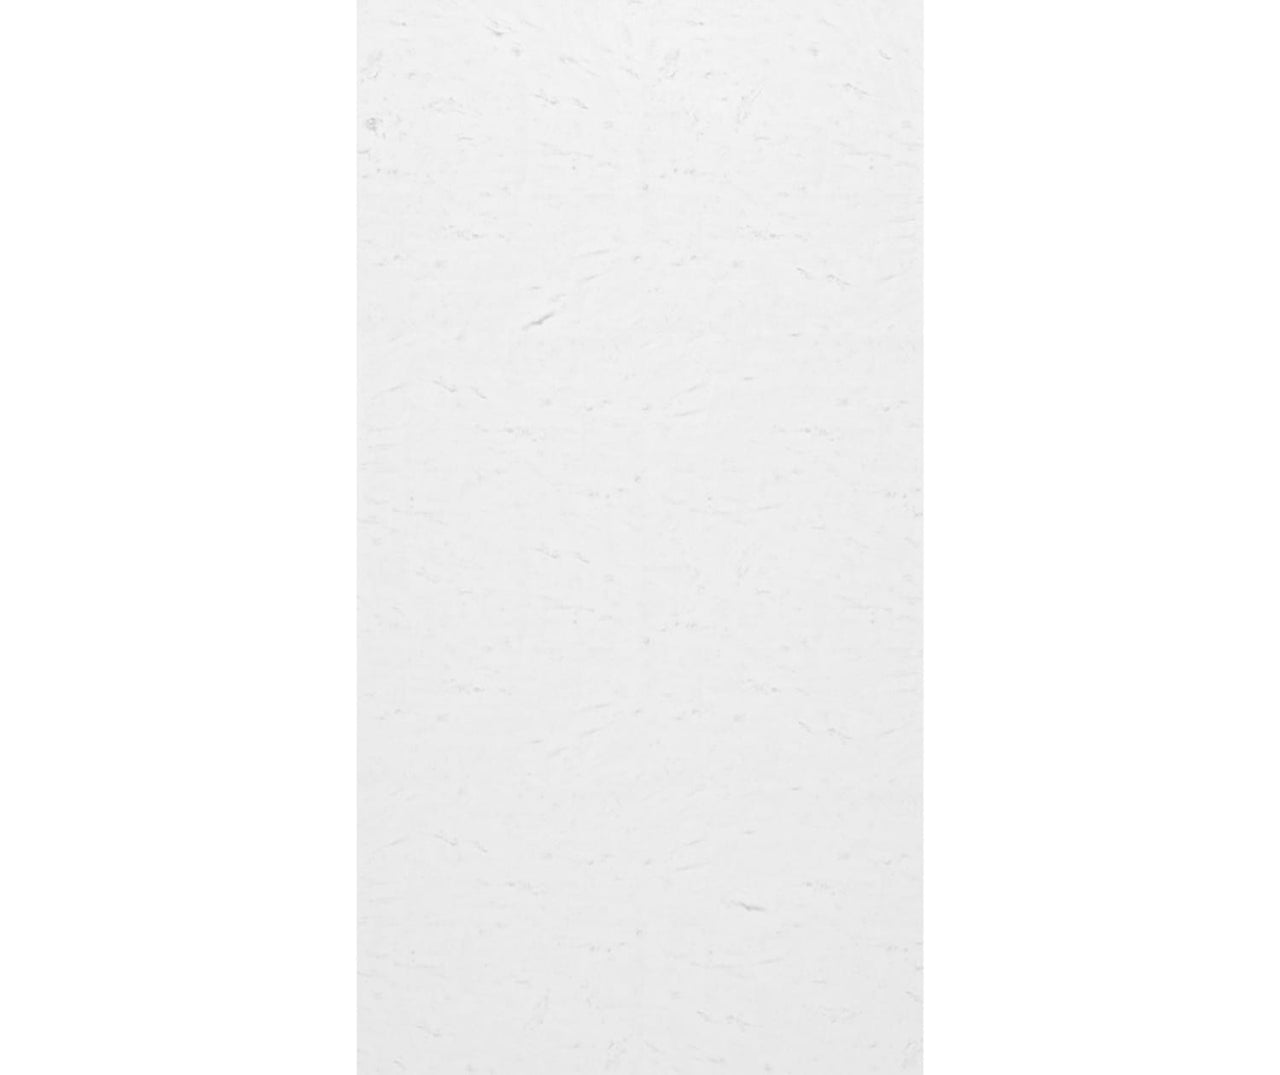 SMMK-7230-1 30 x 72 Swanstone Smooth Tile Glue up Bathtub and Shower Single Wall Panel  - BNGBath